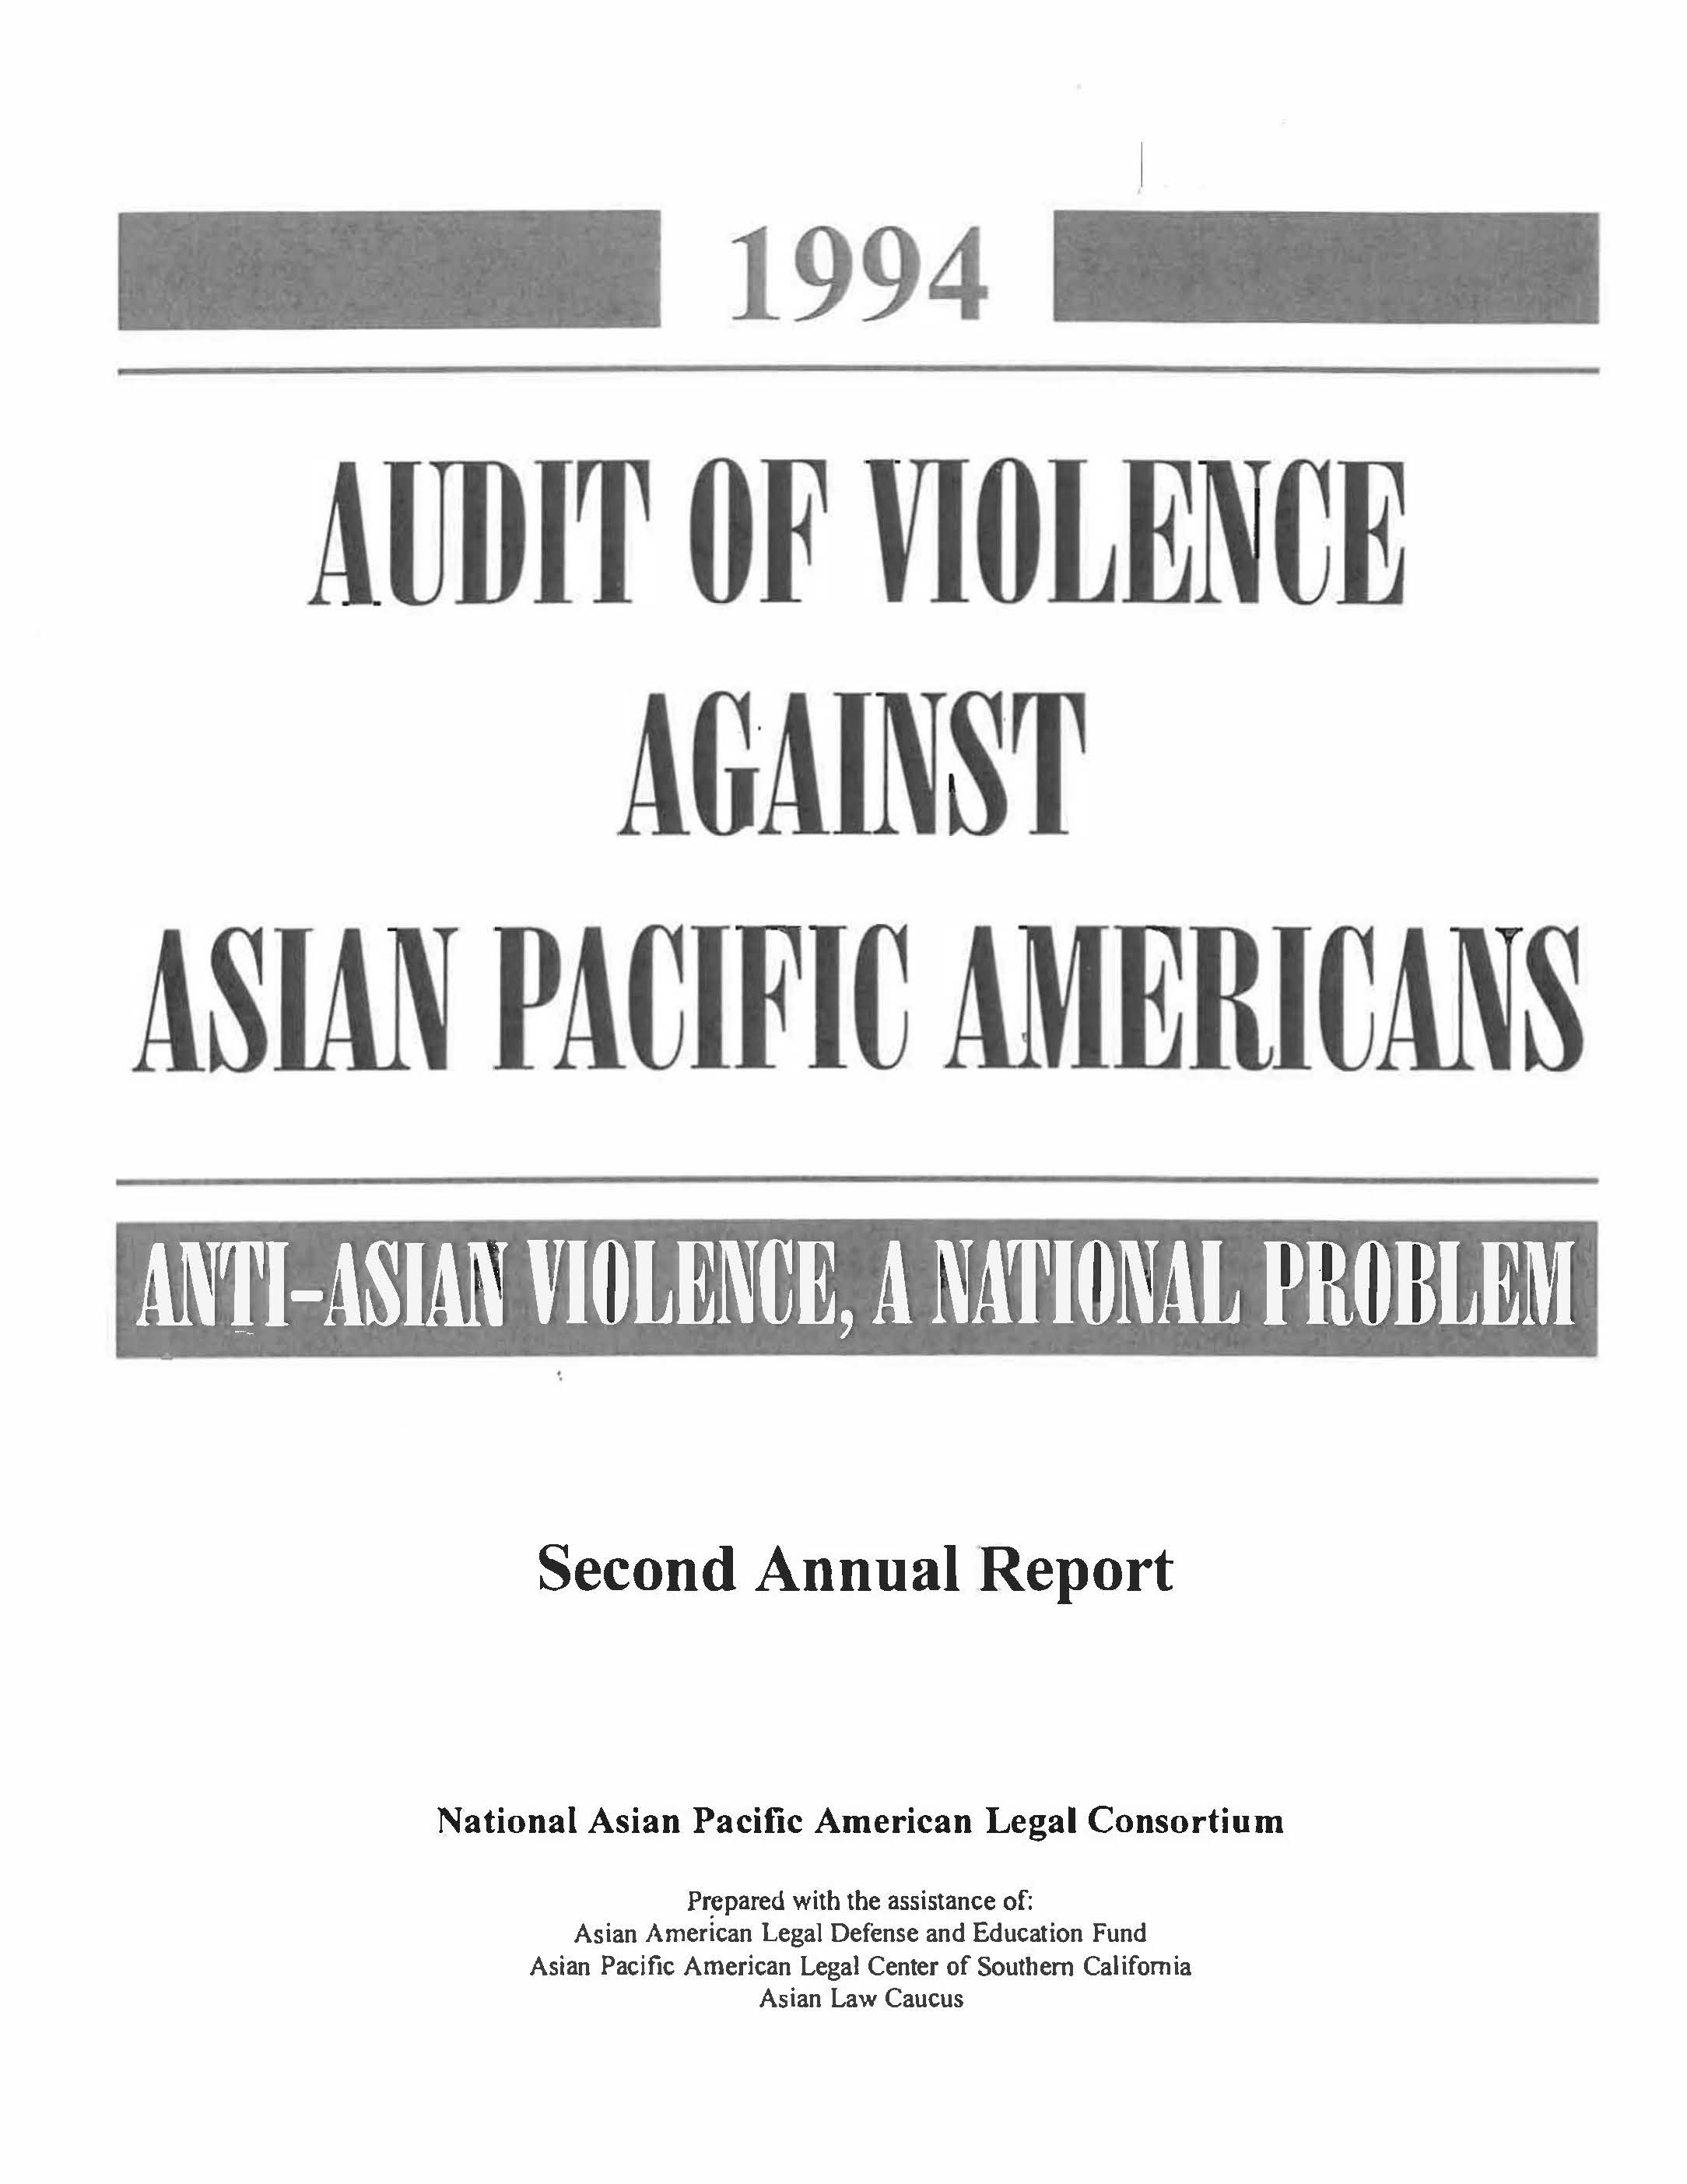 1994 report